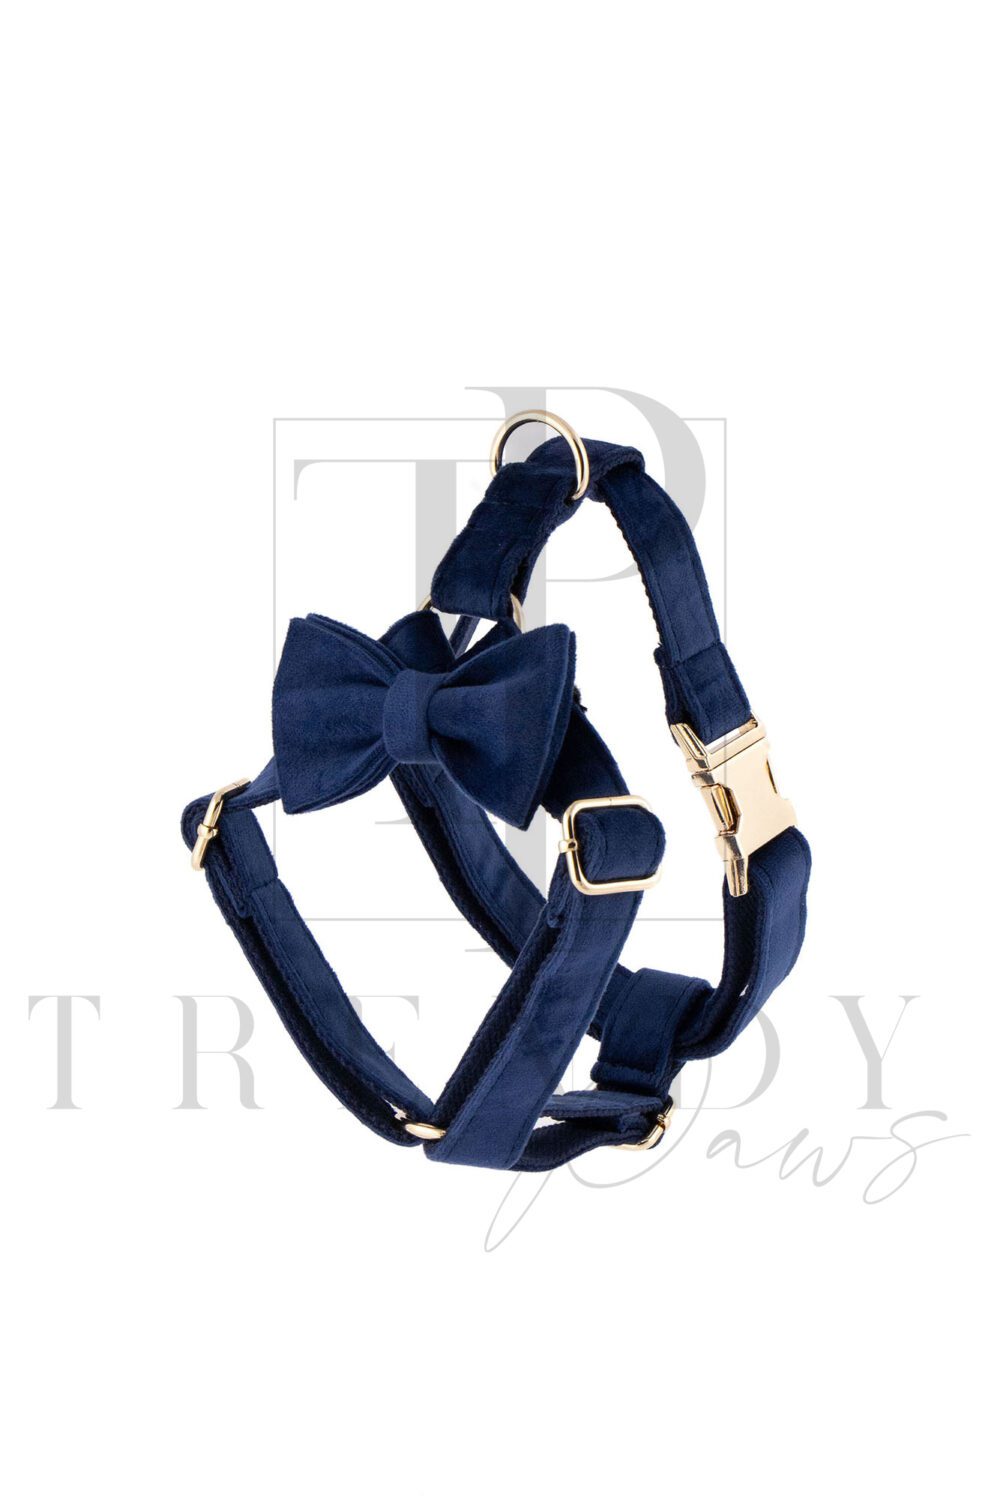 Blue velvet soft dog harnesses harness bow ties